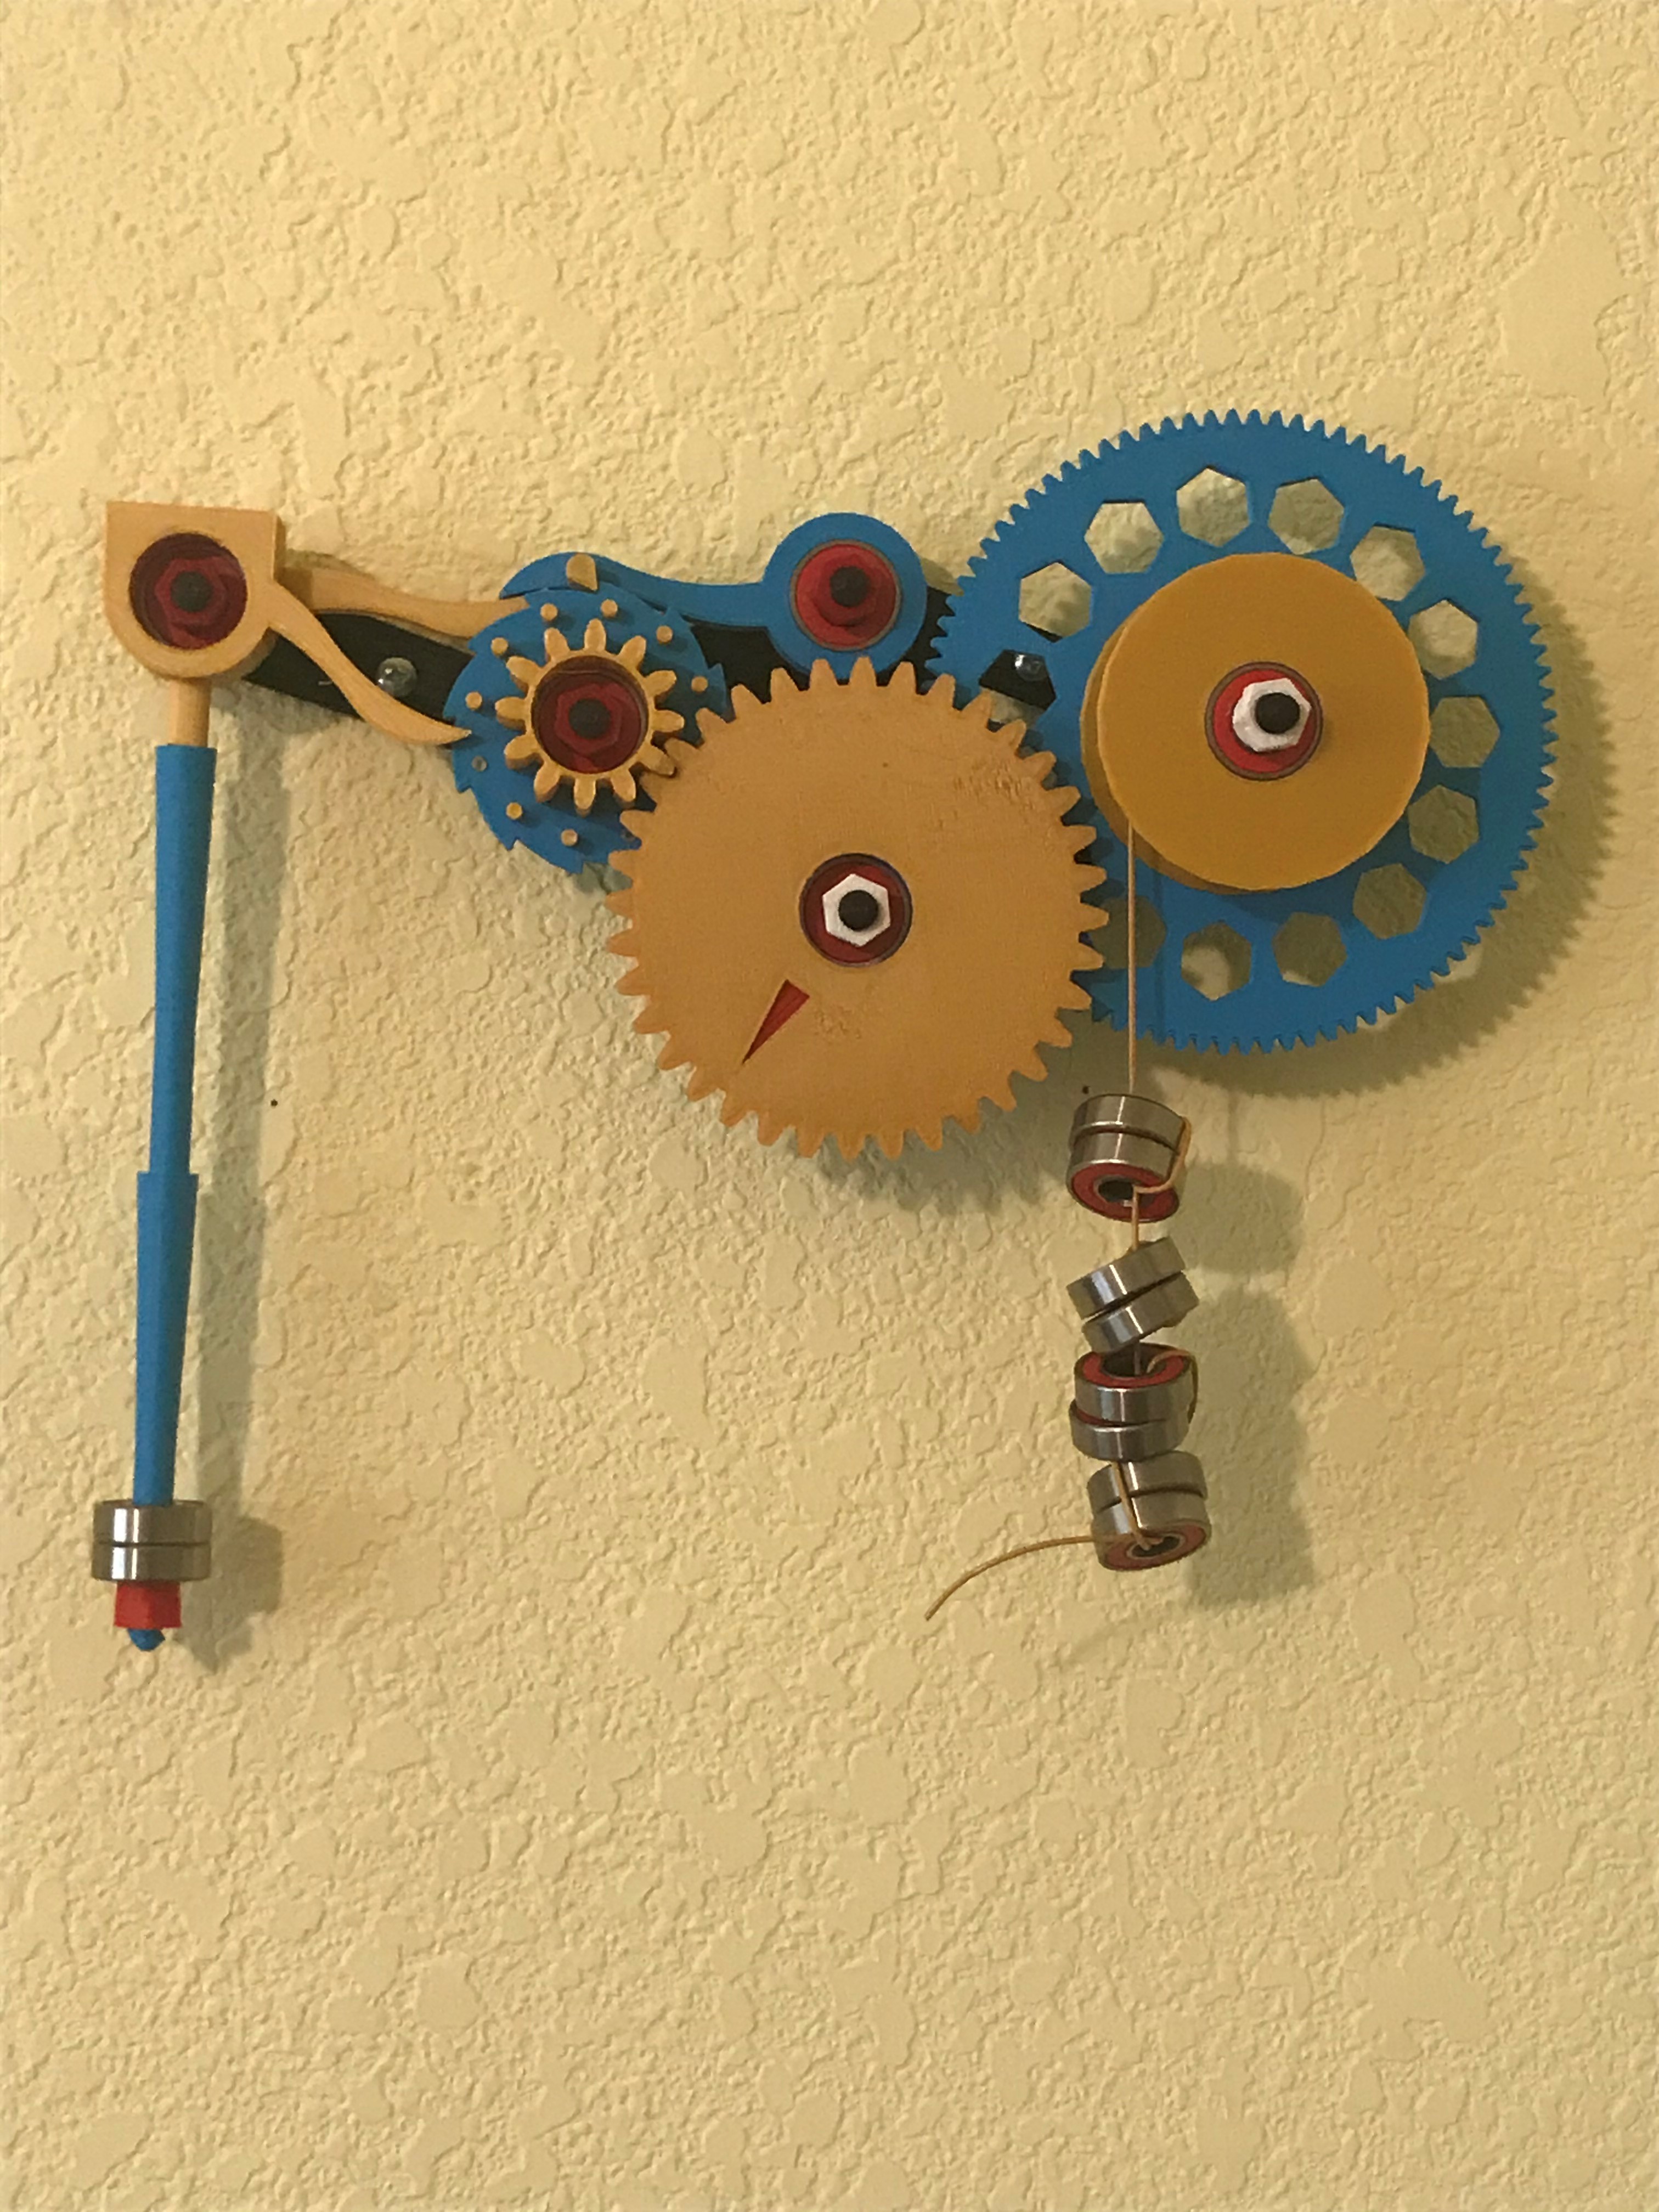 Clockwork using Galileo's Escapement